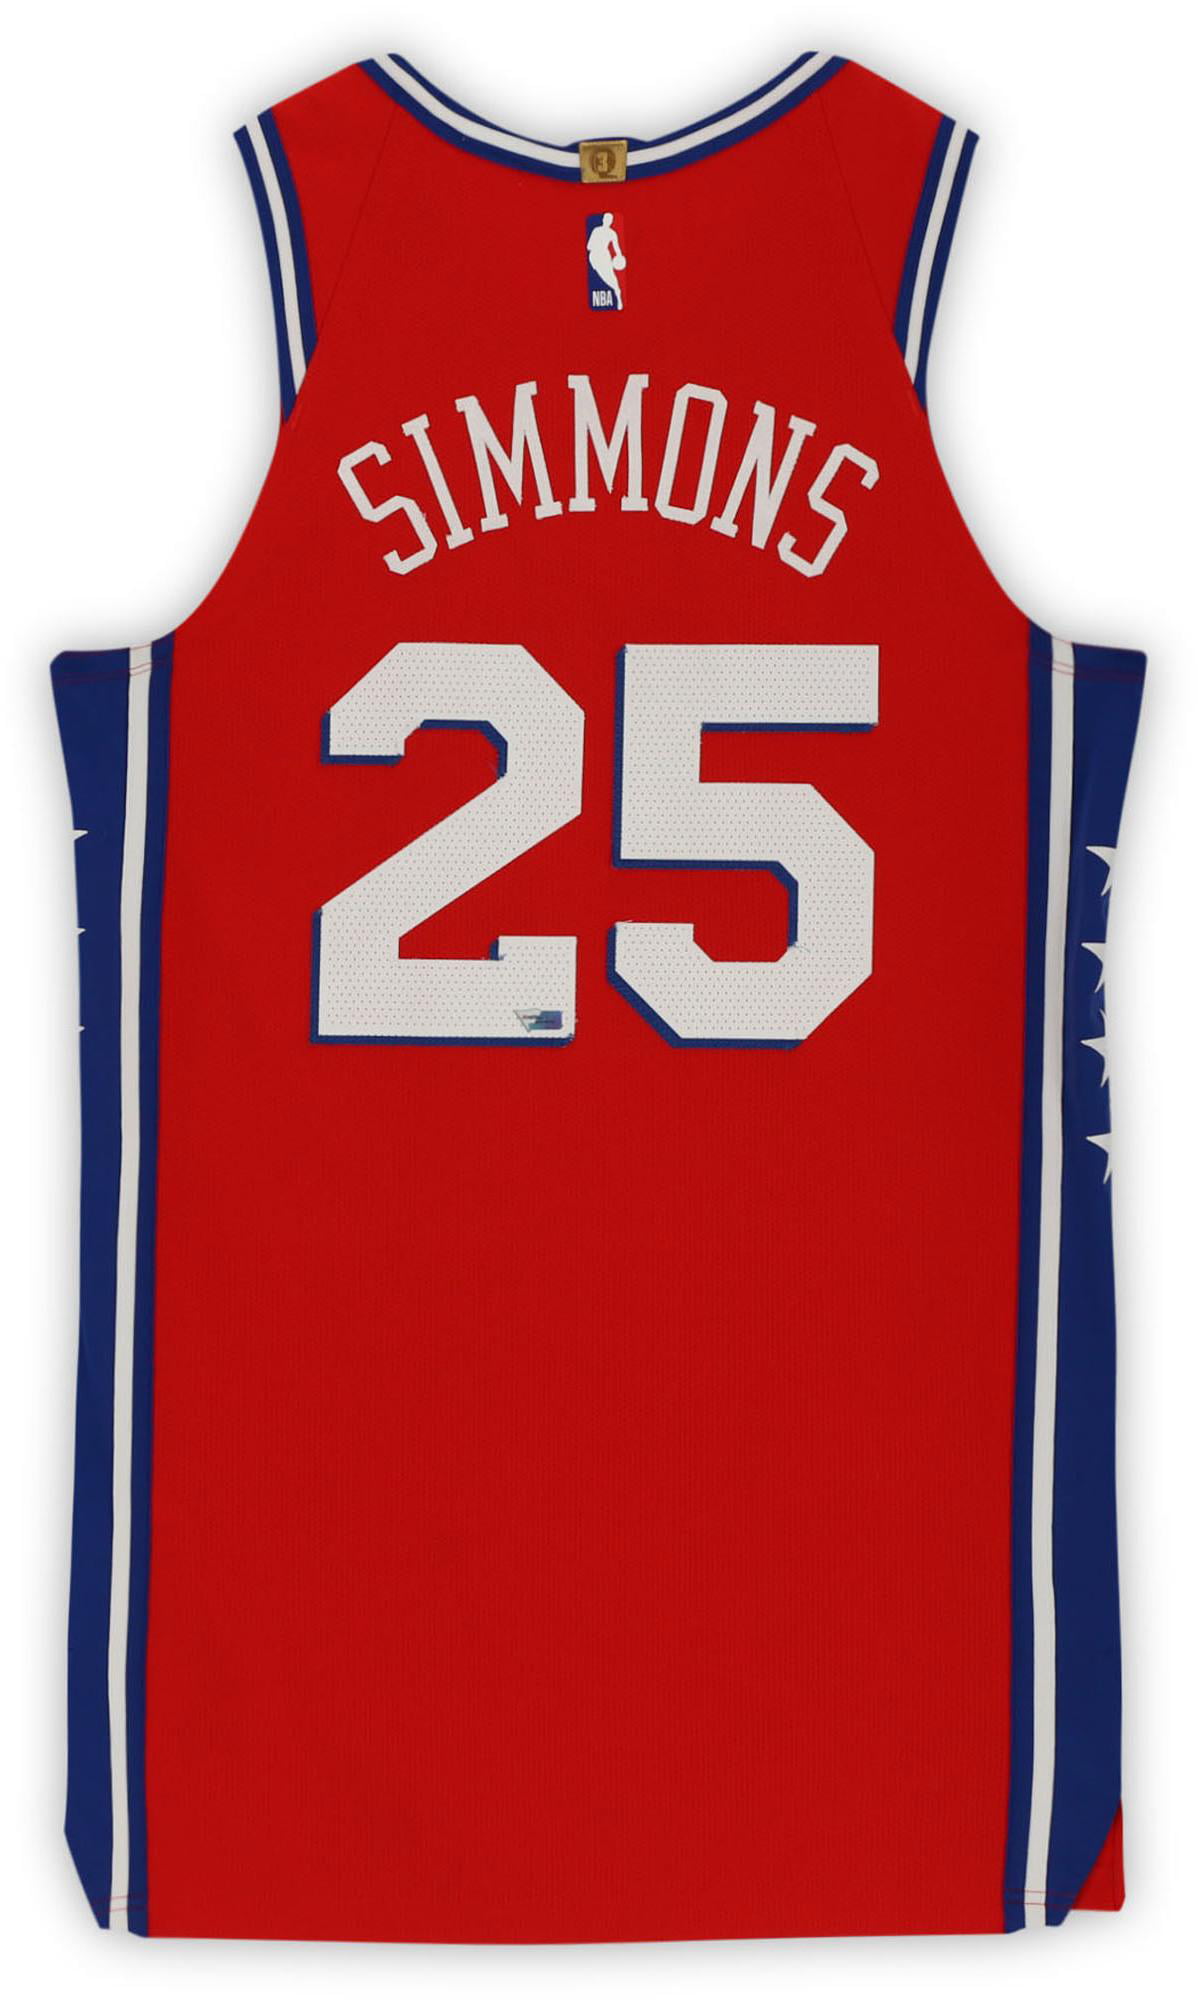 Ben Simmons # 25 Philadelphia 76ers Basketball Jersey Stitched 